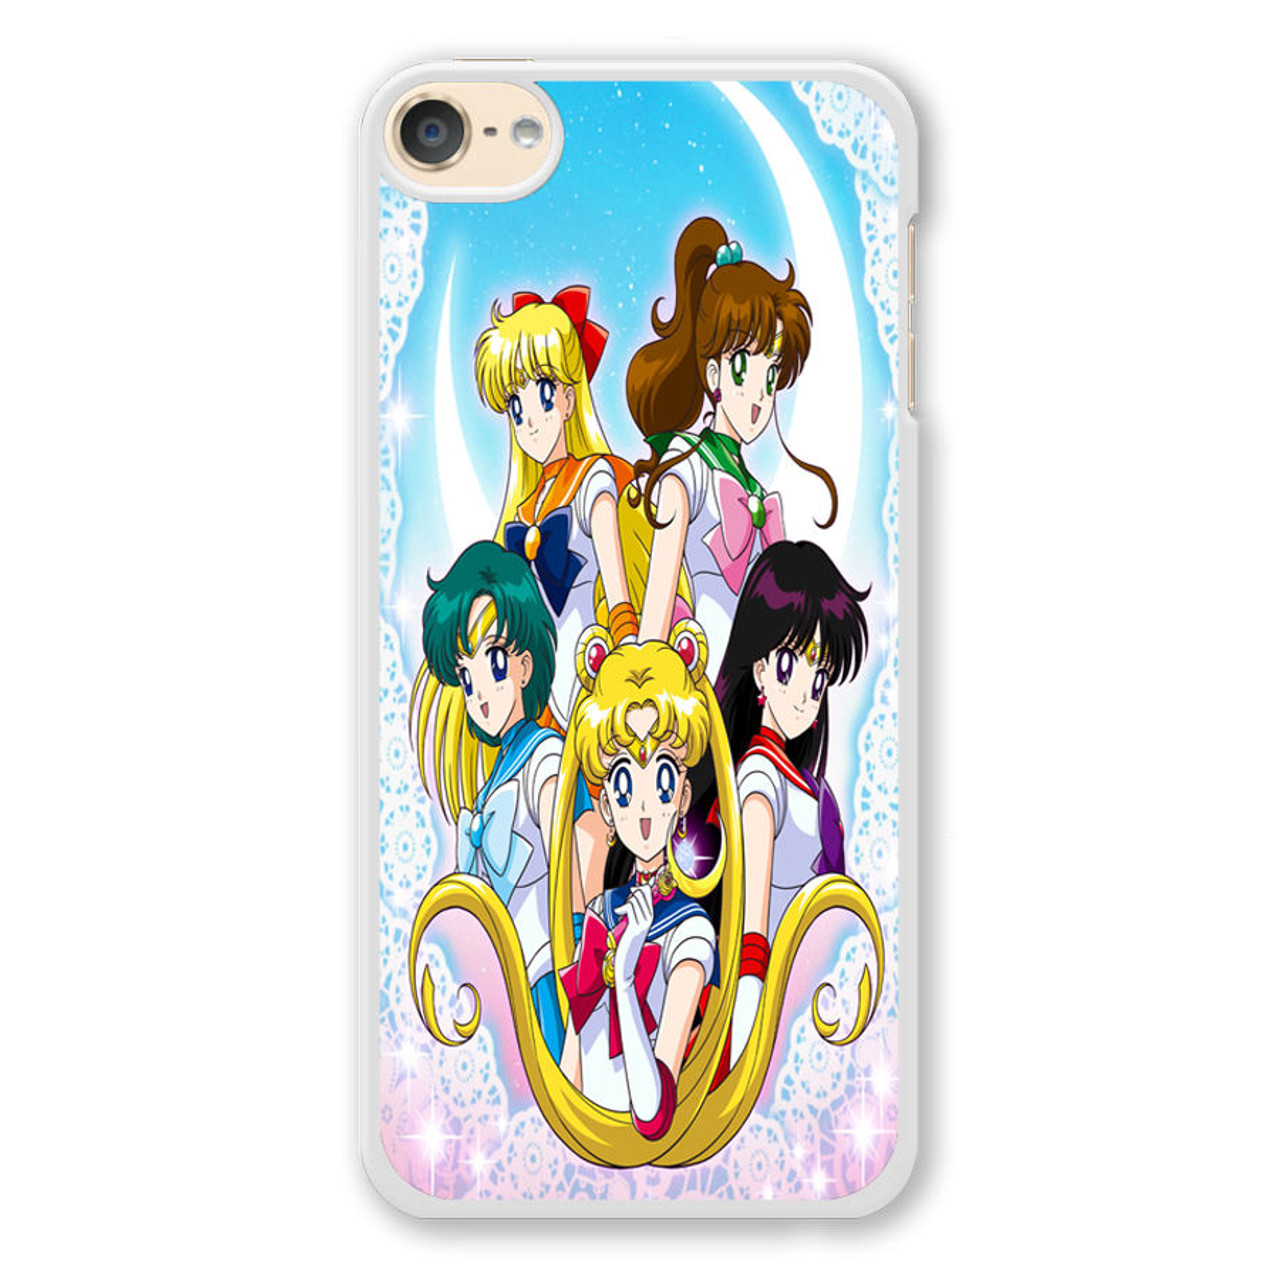 Sailormoon Cute Wallpaper Ipod Touch 6 Case Ggians